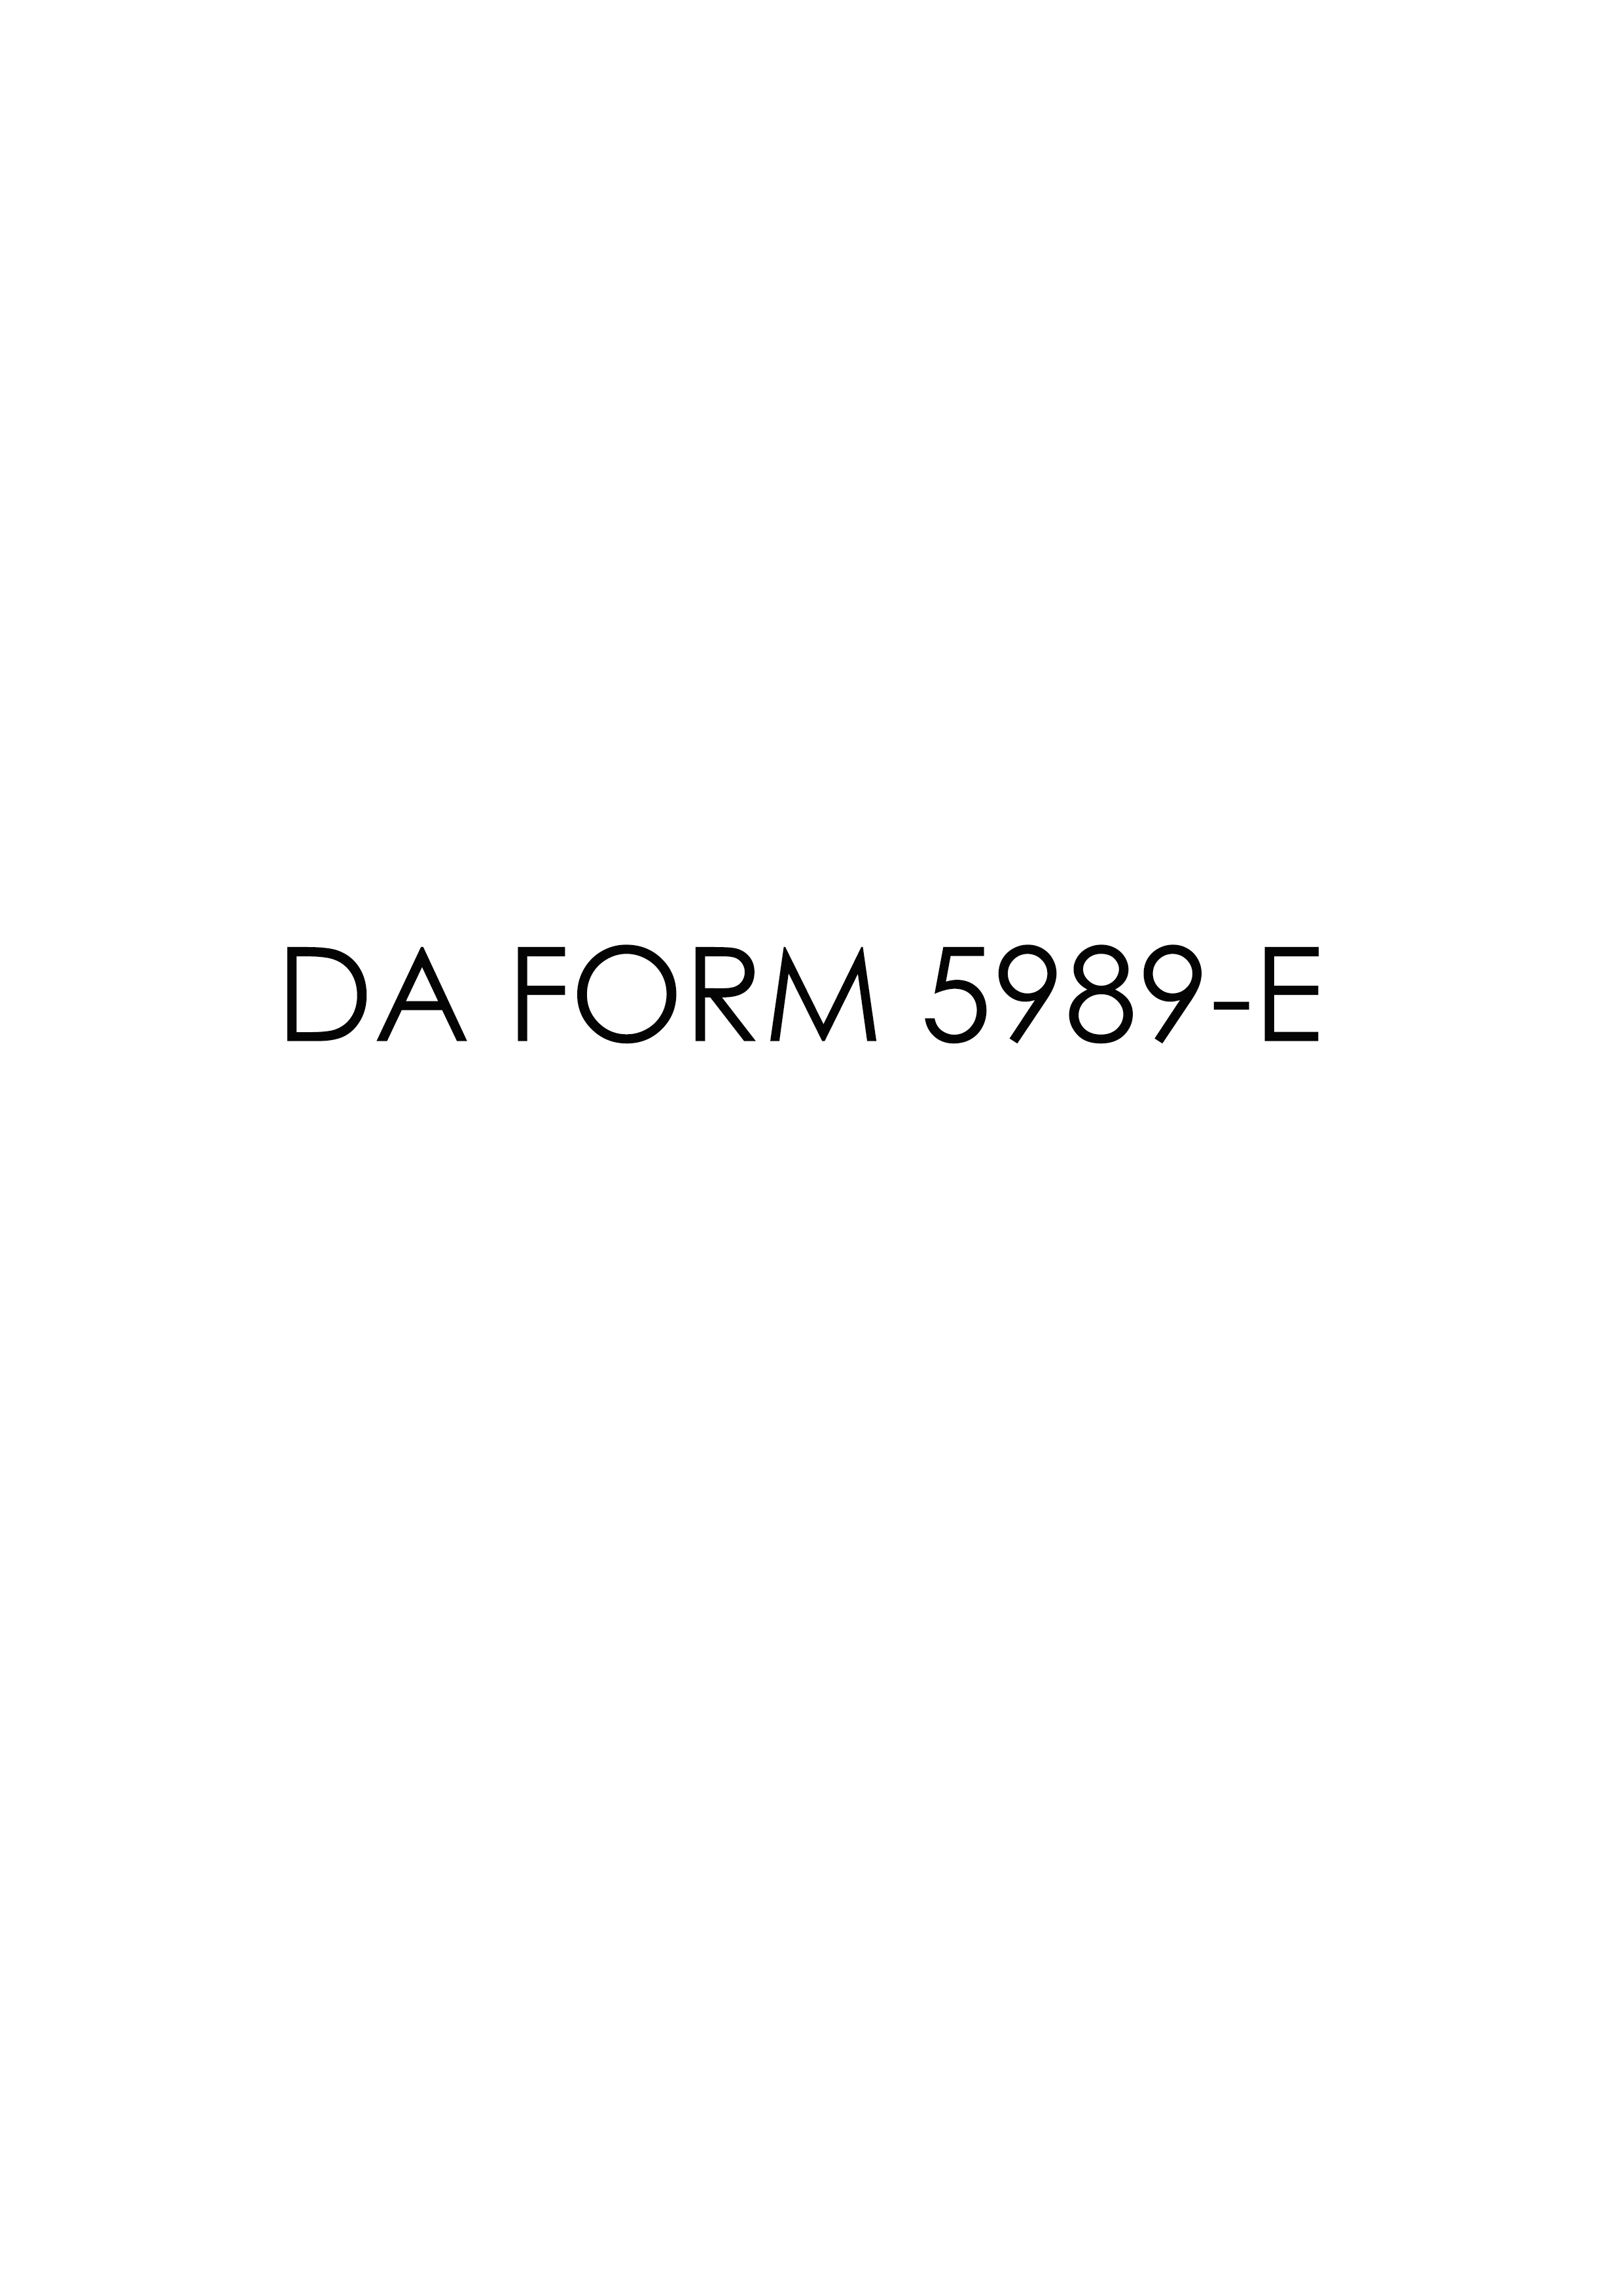 da Form 5989-E fillable